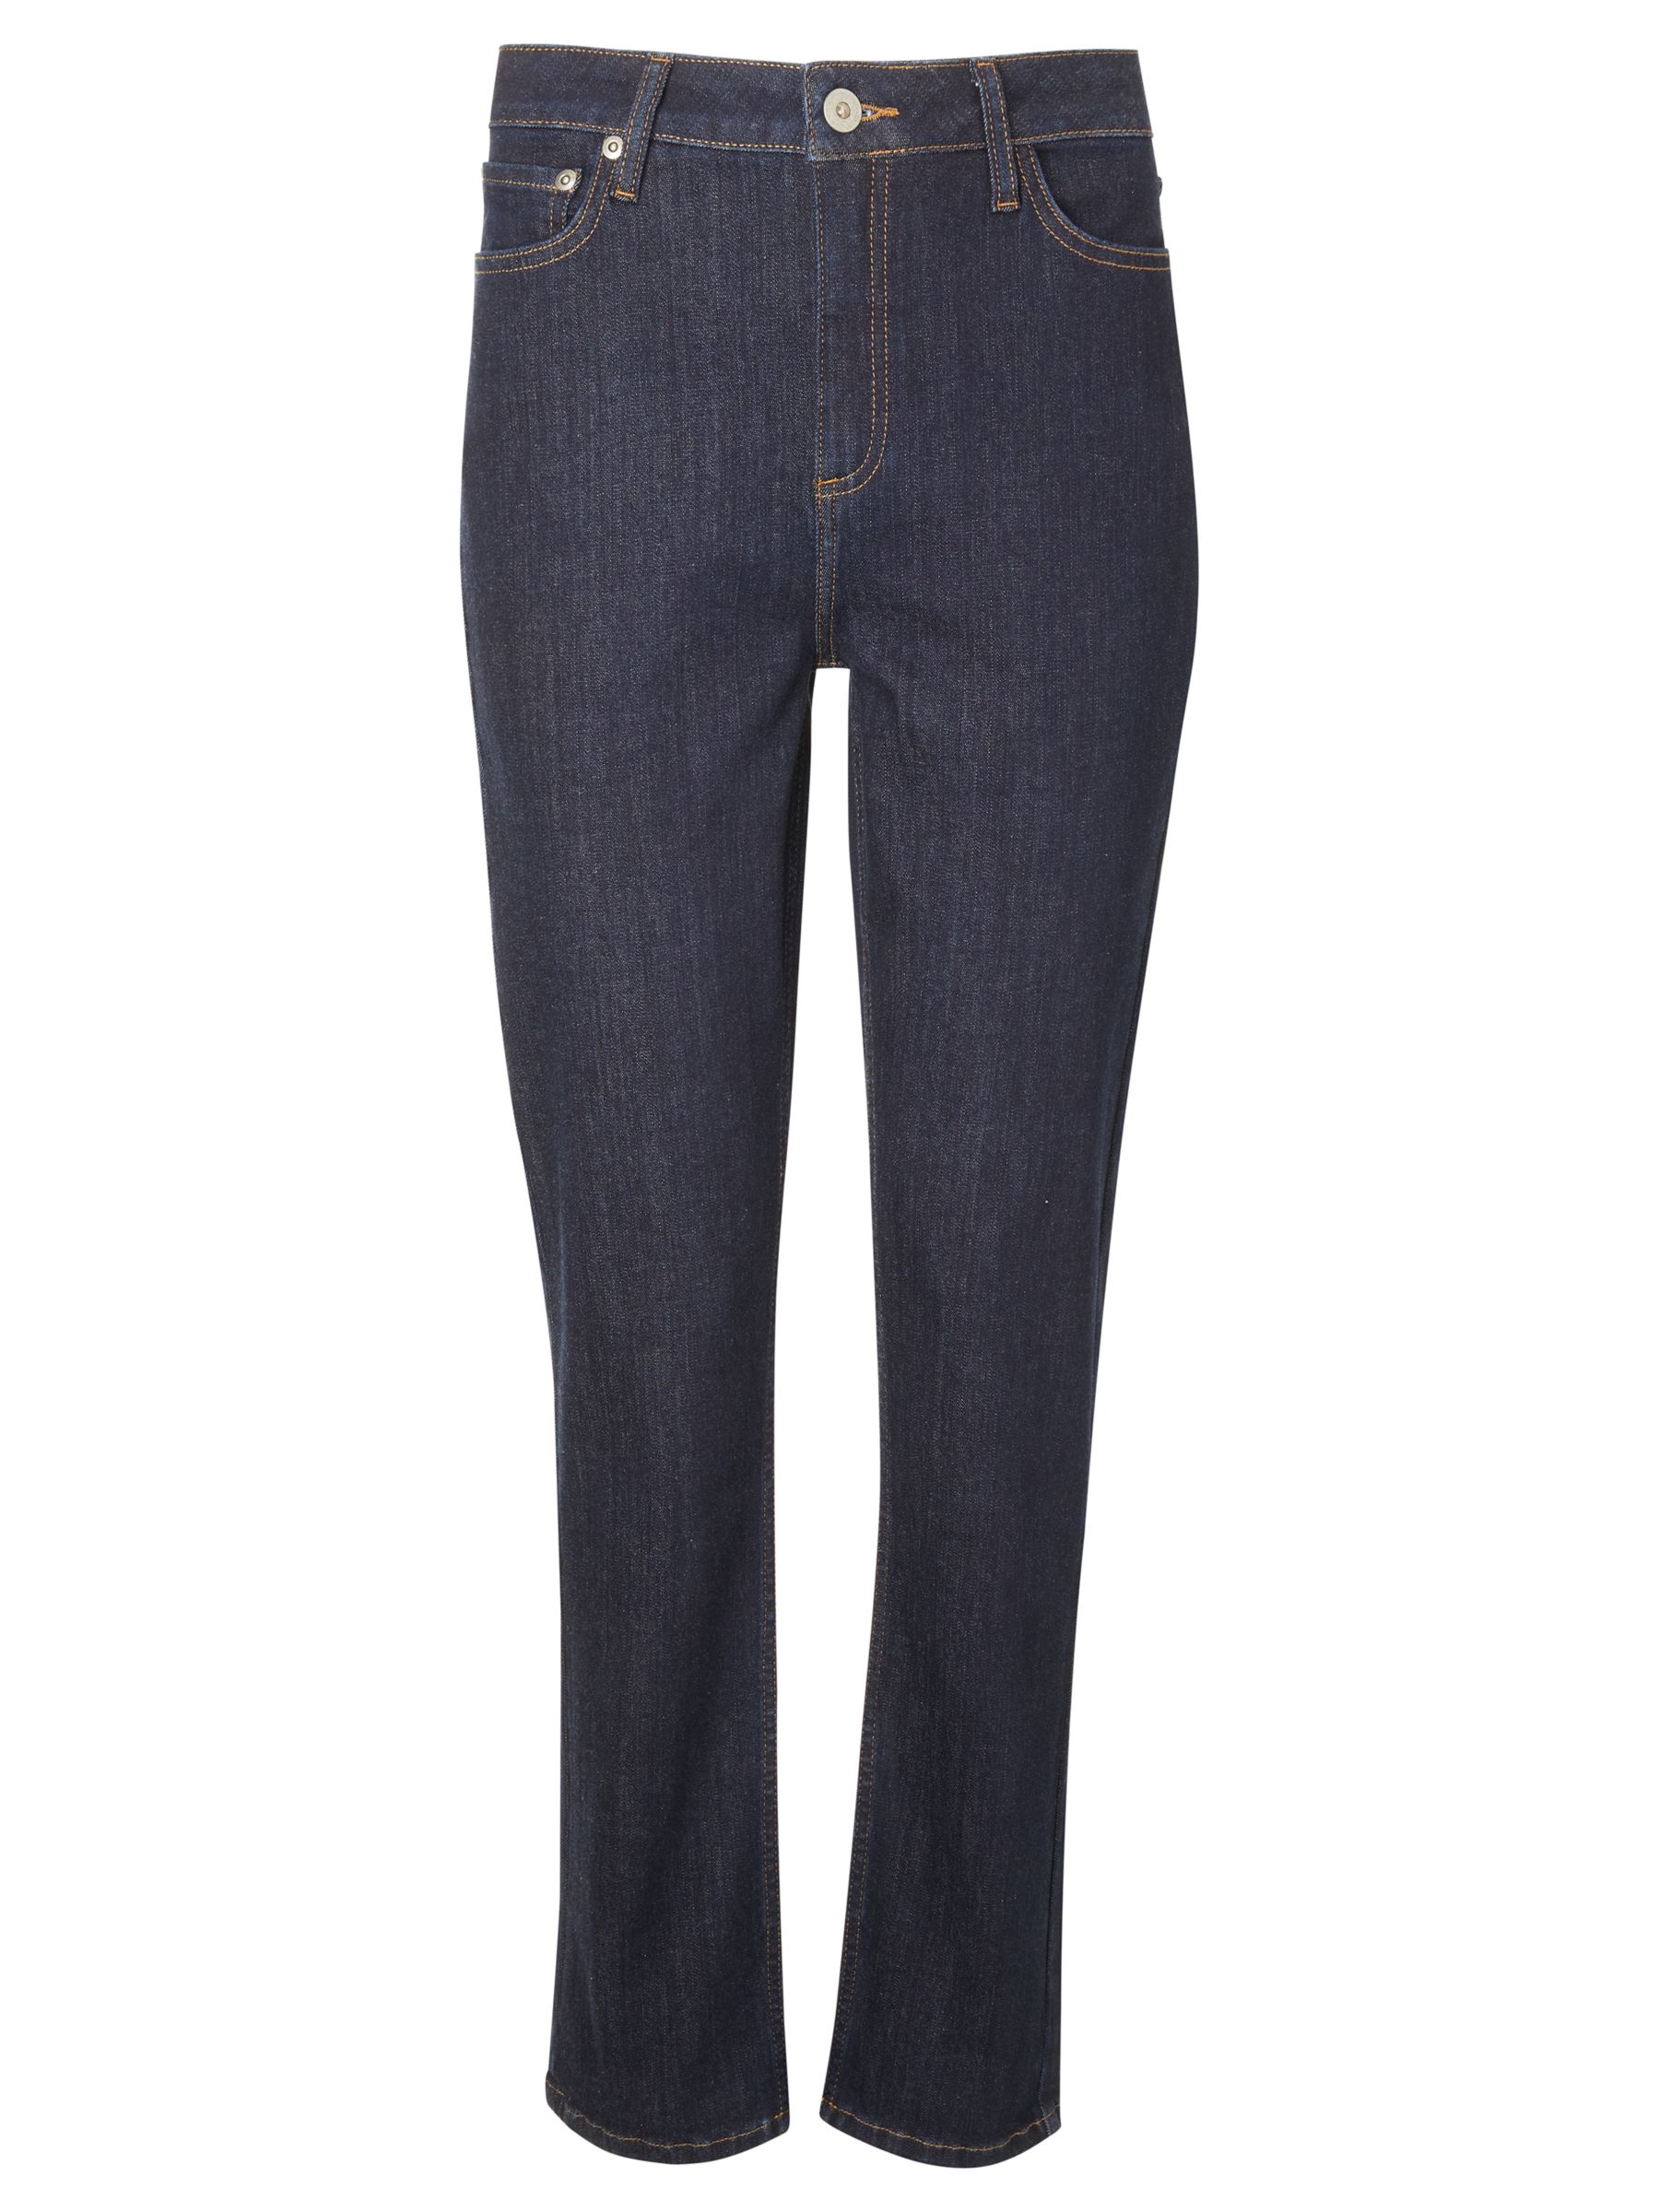 John Lewis & Partners Organic Cotton Rich Straight Leg Jeans, Indigo at ...